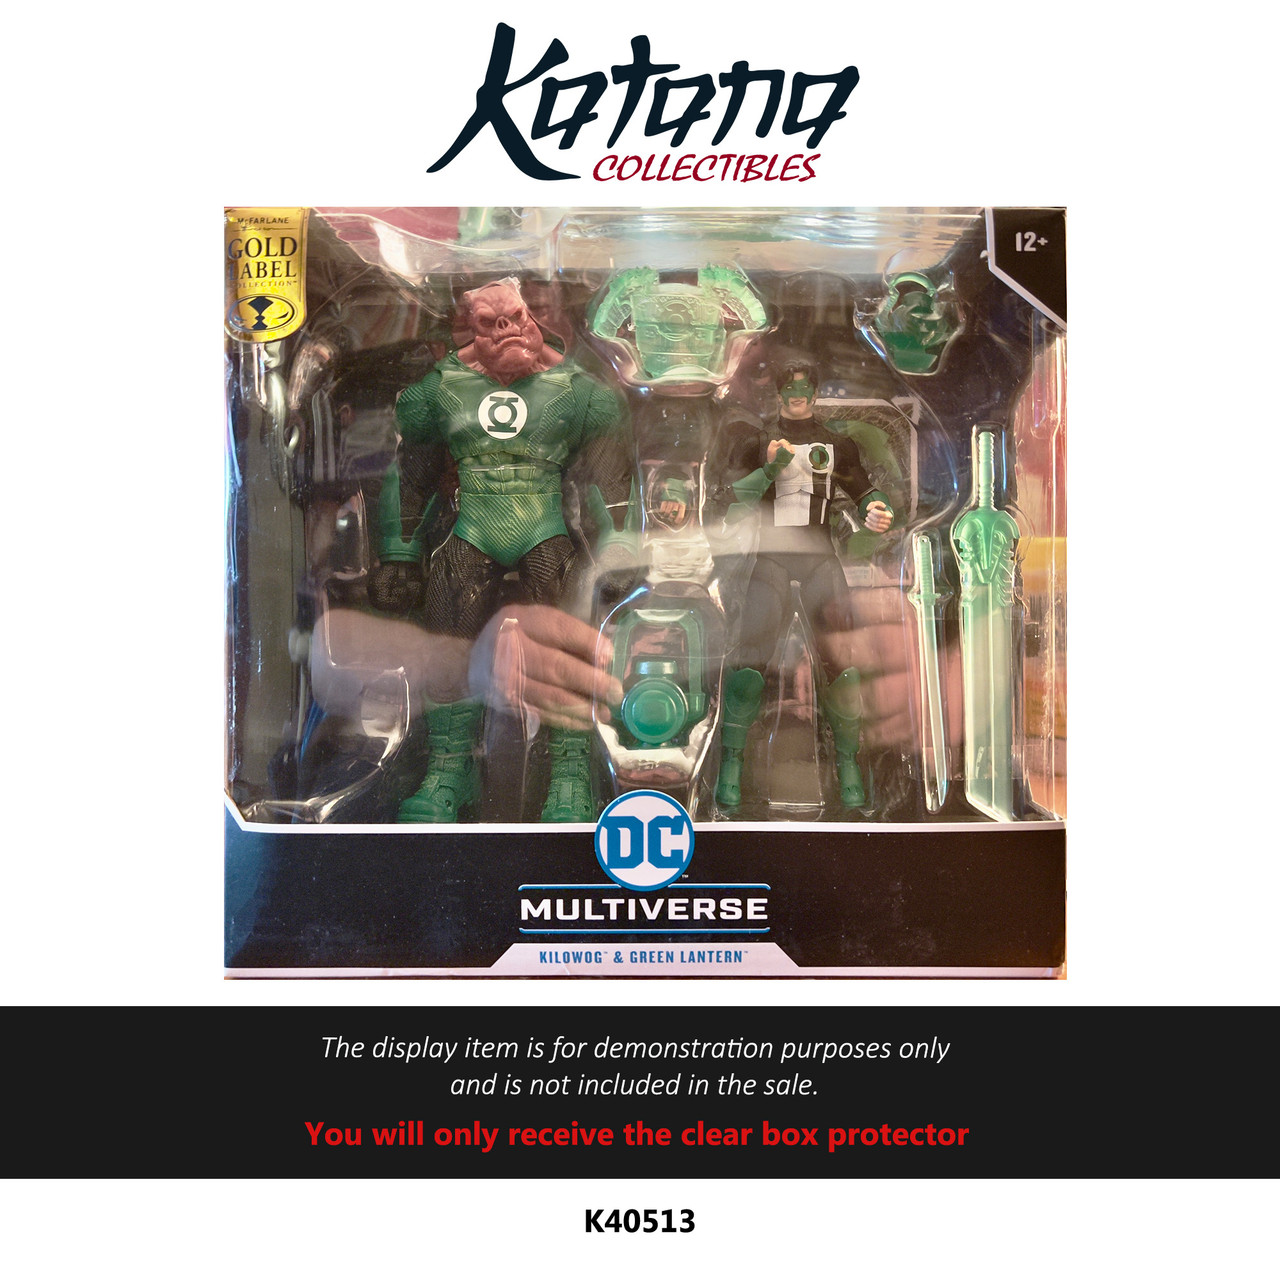 Katana Collectibles Protector For DC Multiverse Kilowog & Green Lantern Kyle Rayner